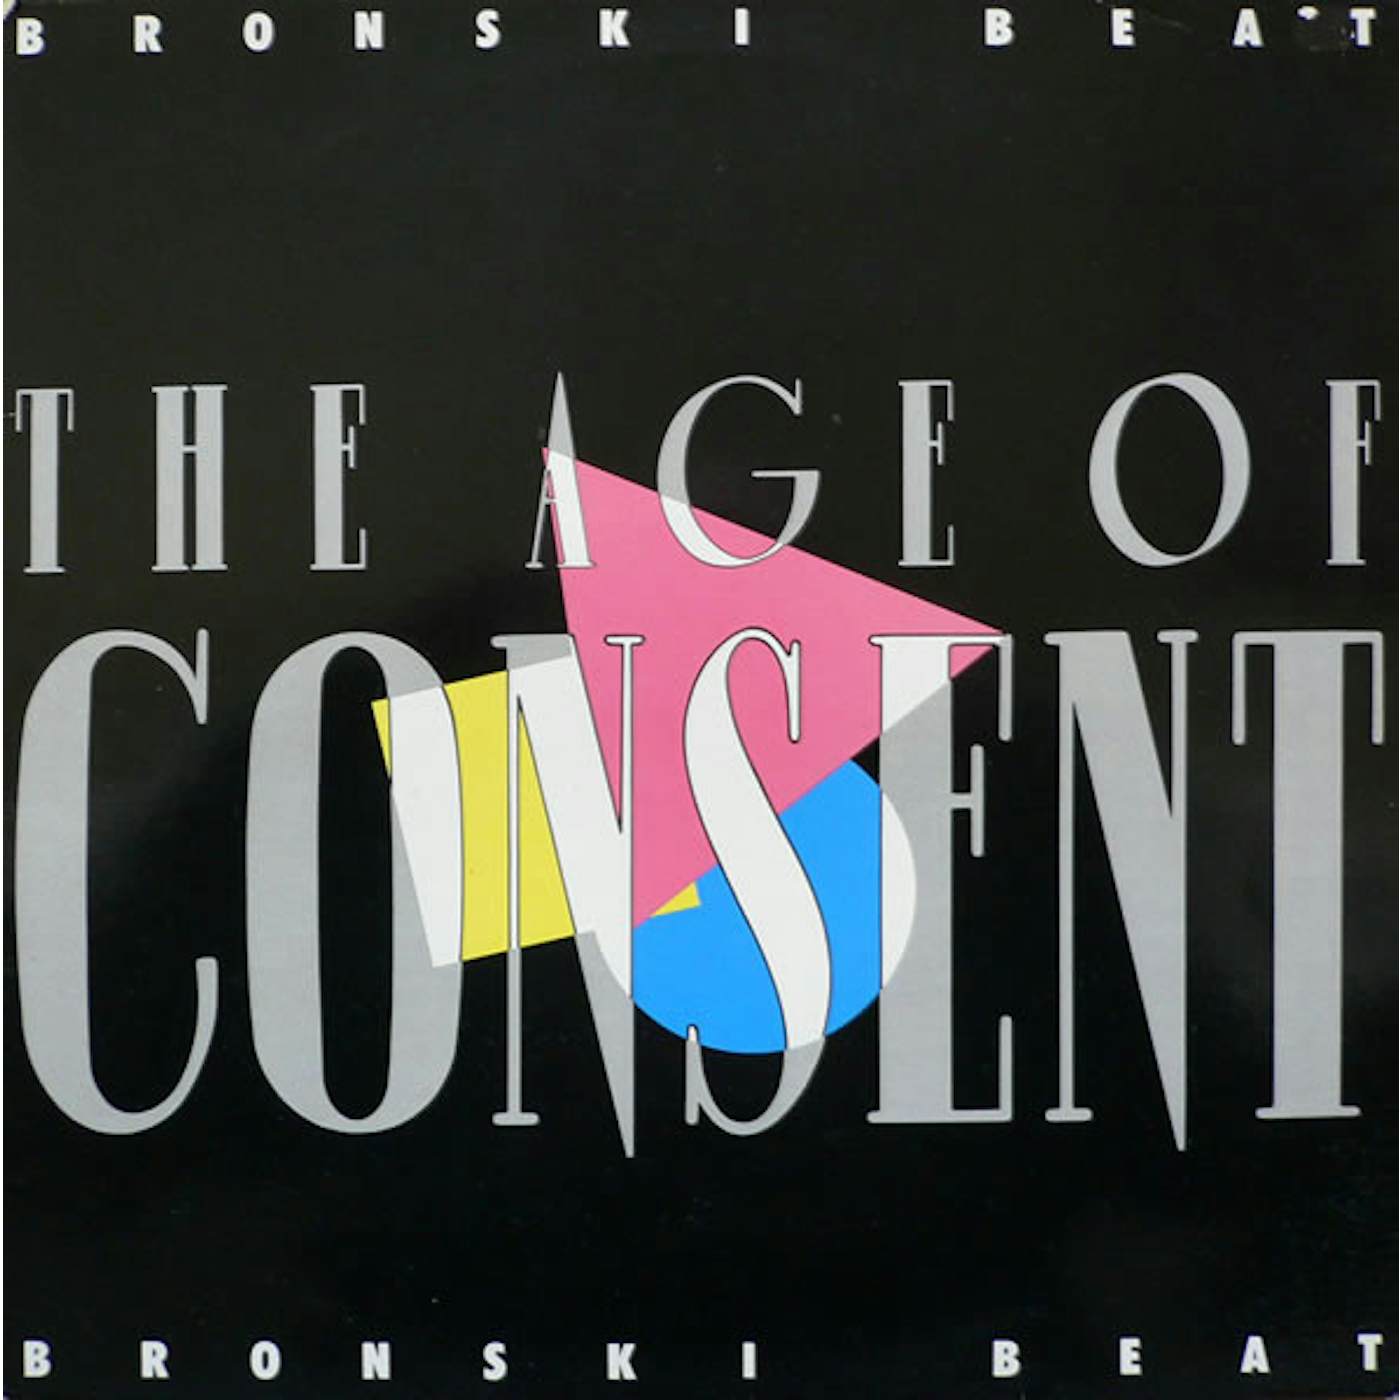 Bronski Beat Age Of Consent Vinyl Record